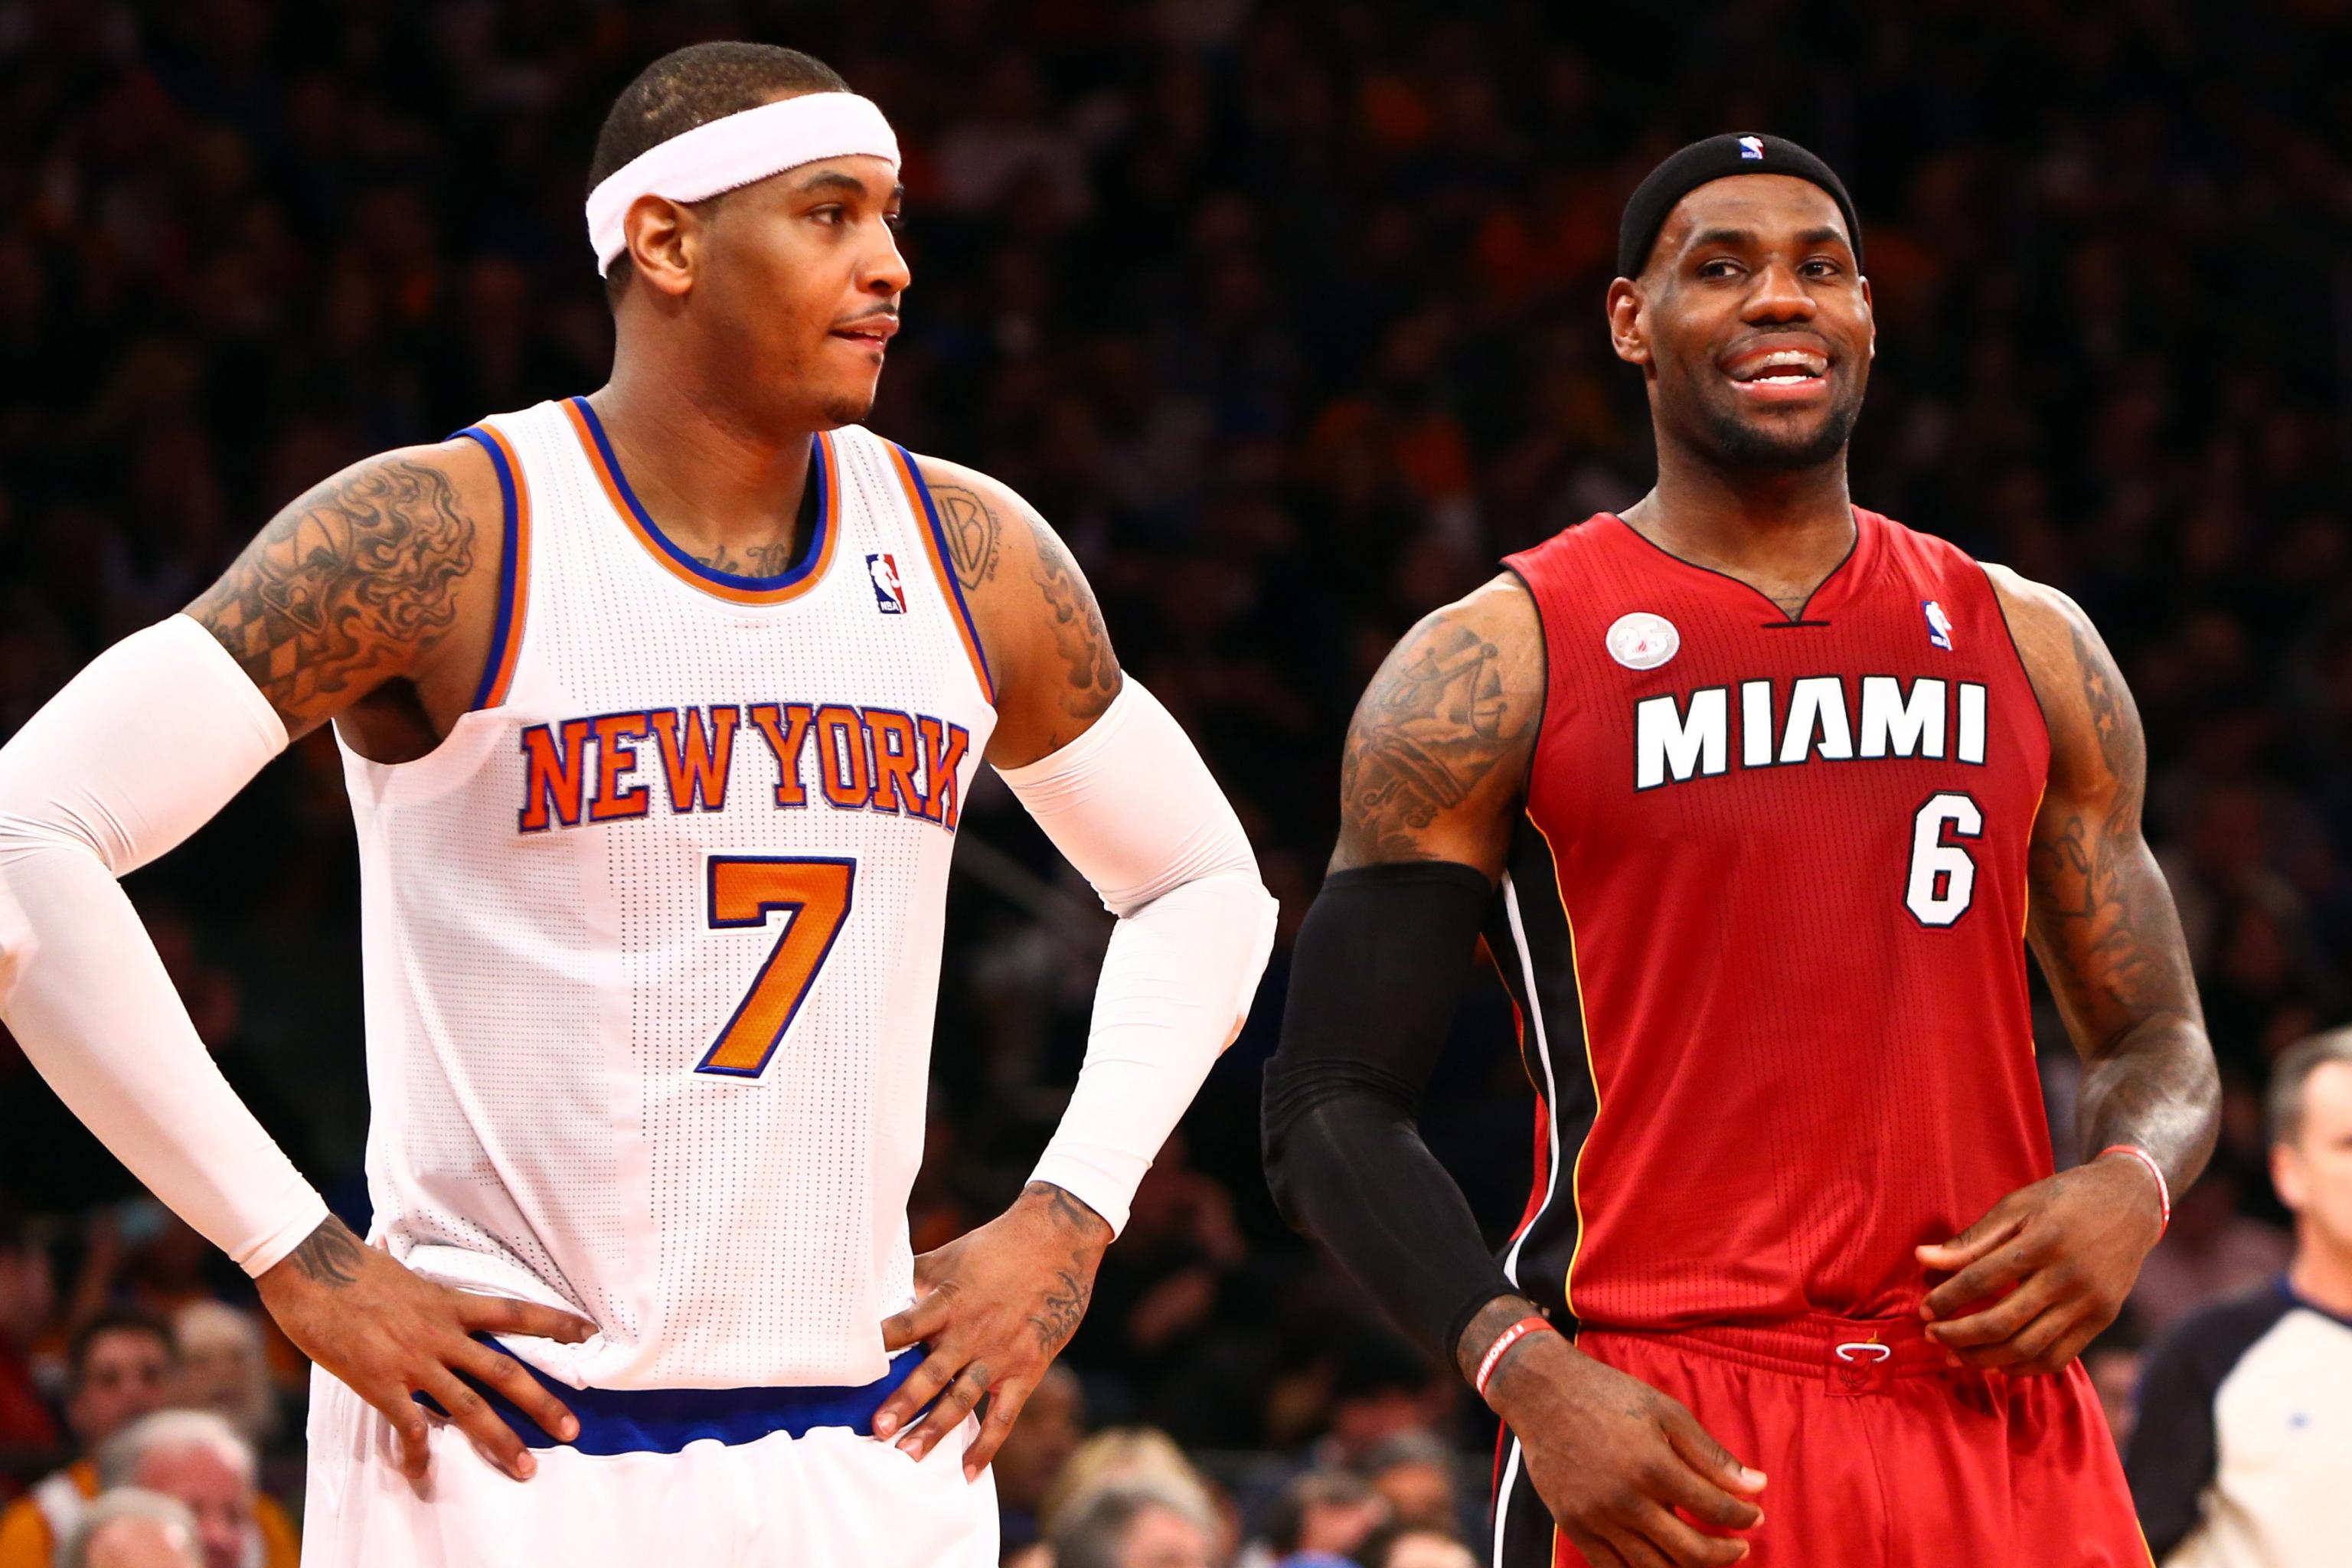 Miami Heat's LeBron James sits between the Larry O'Brien NBA